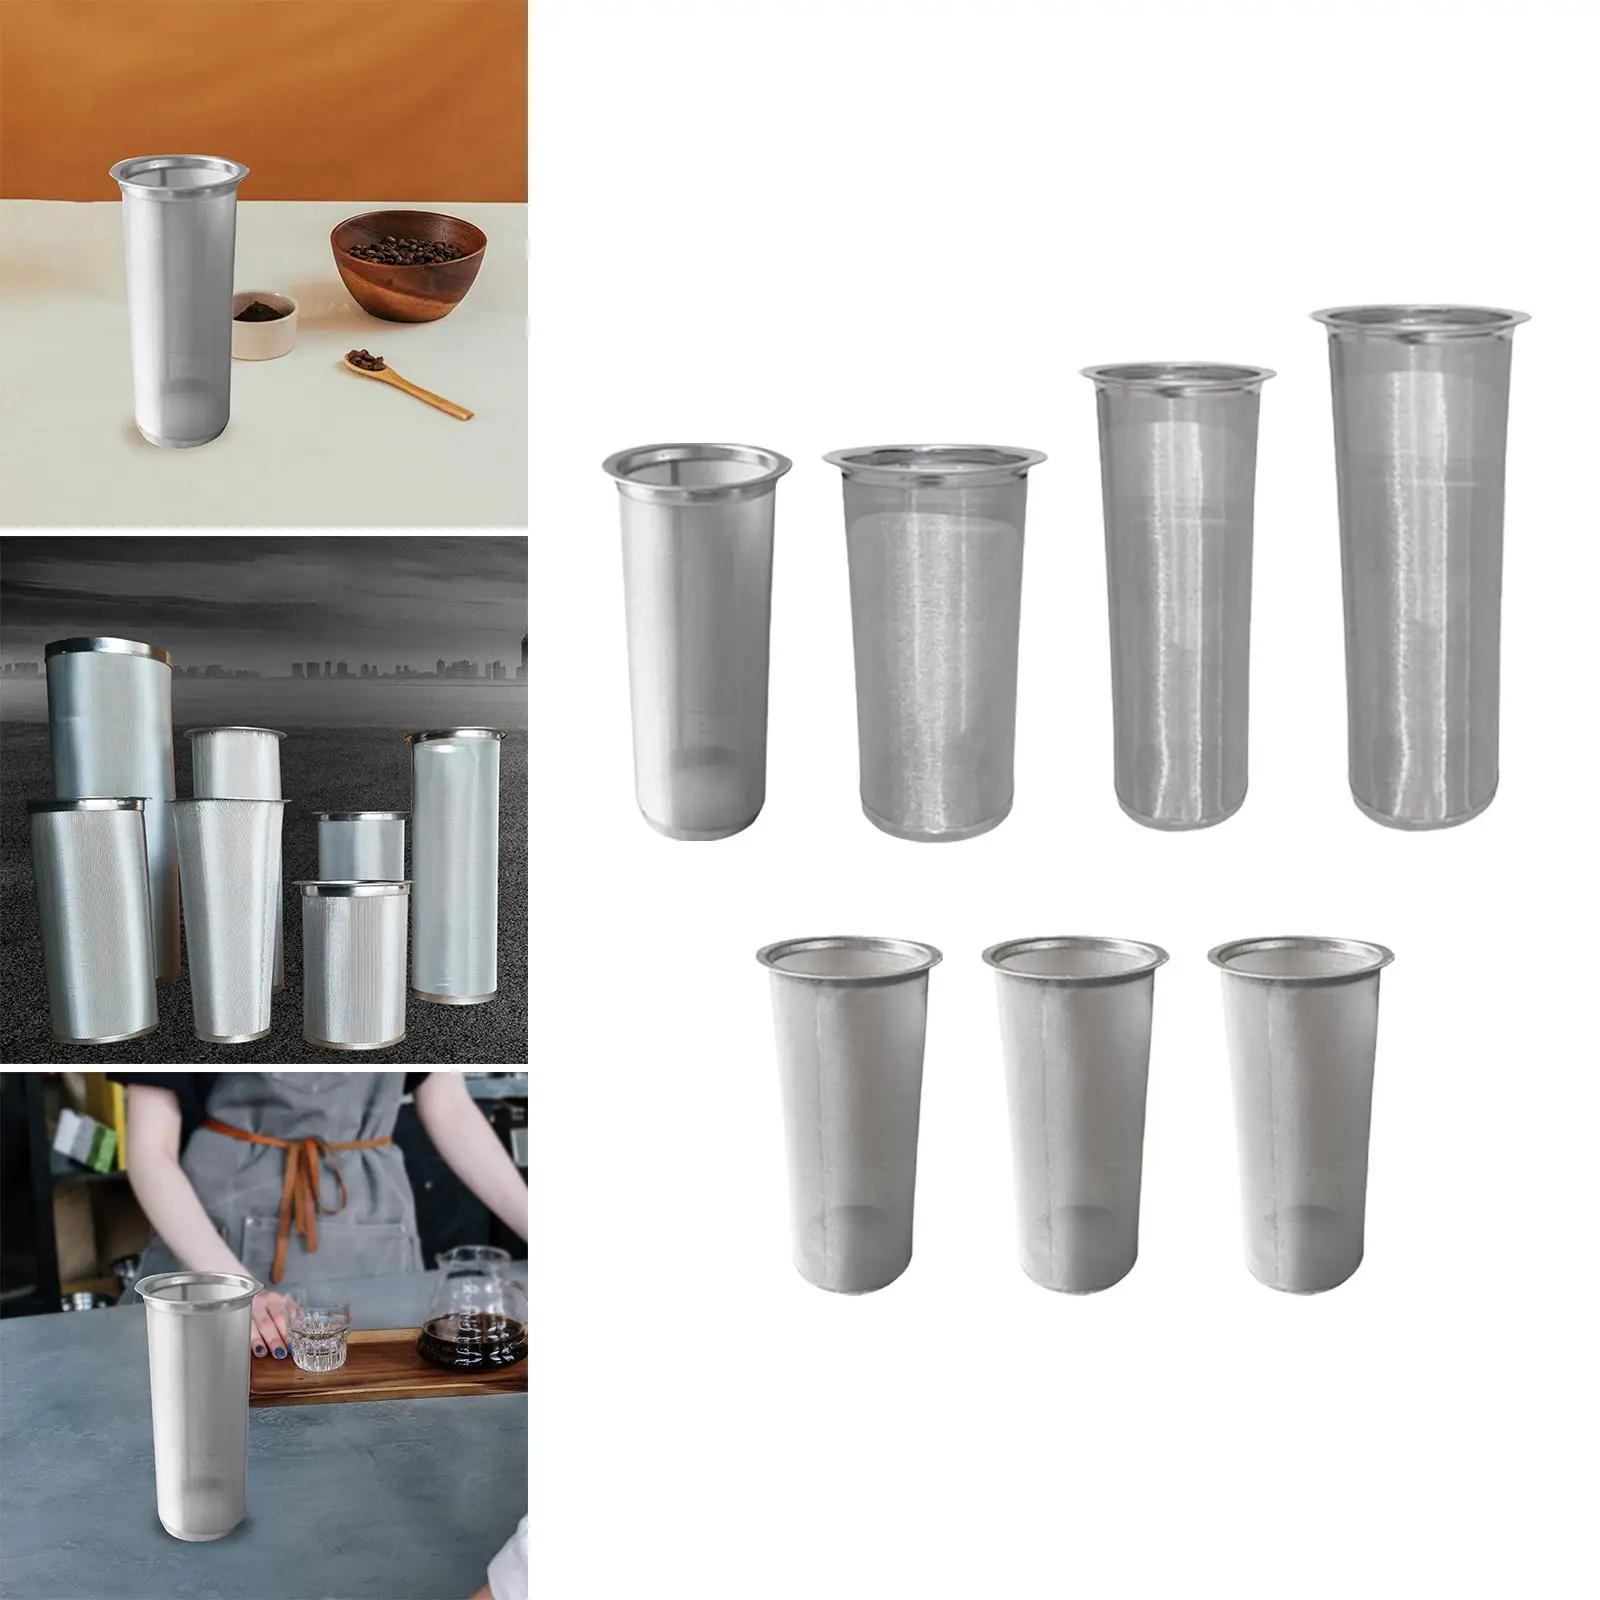 Stainless Steel Mesh Filter Tea Filter Infusers Basket Lightweight